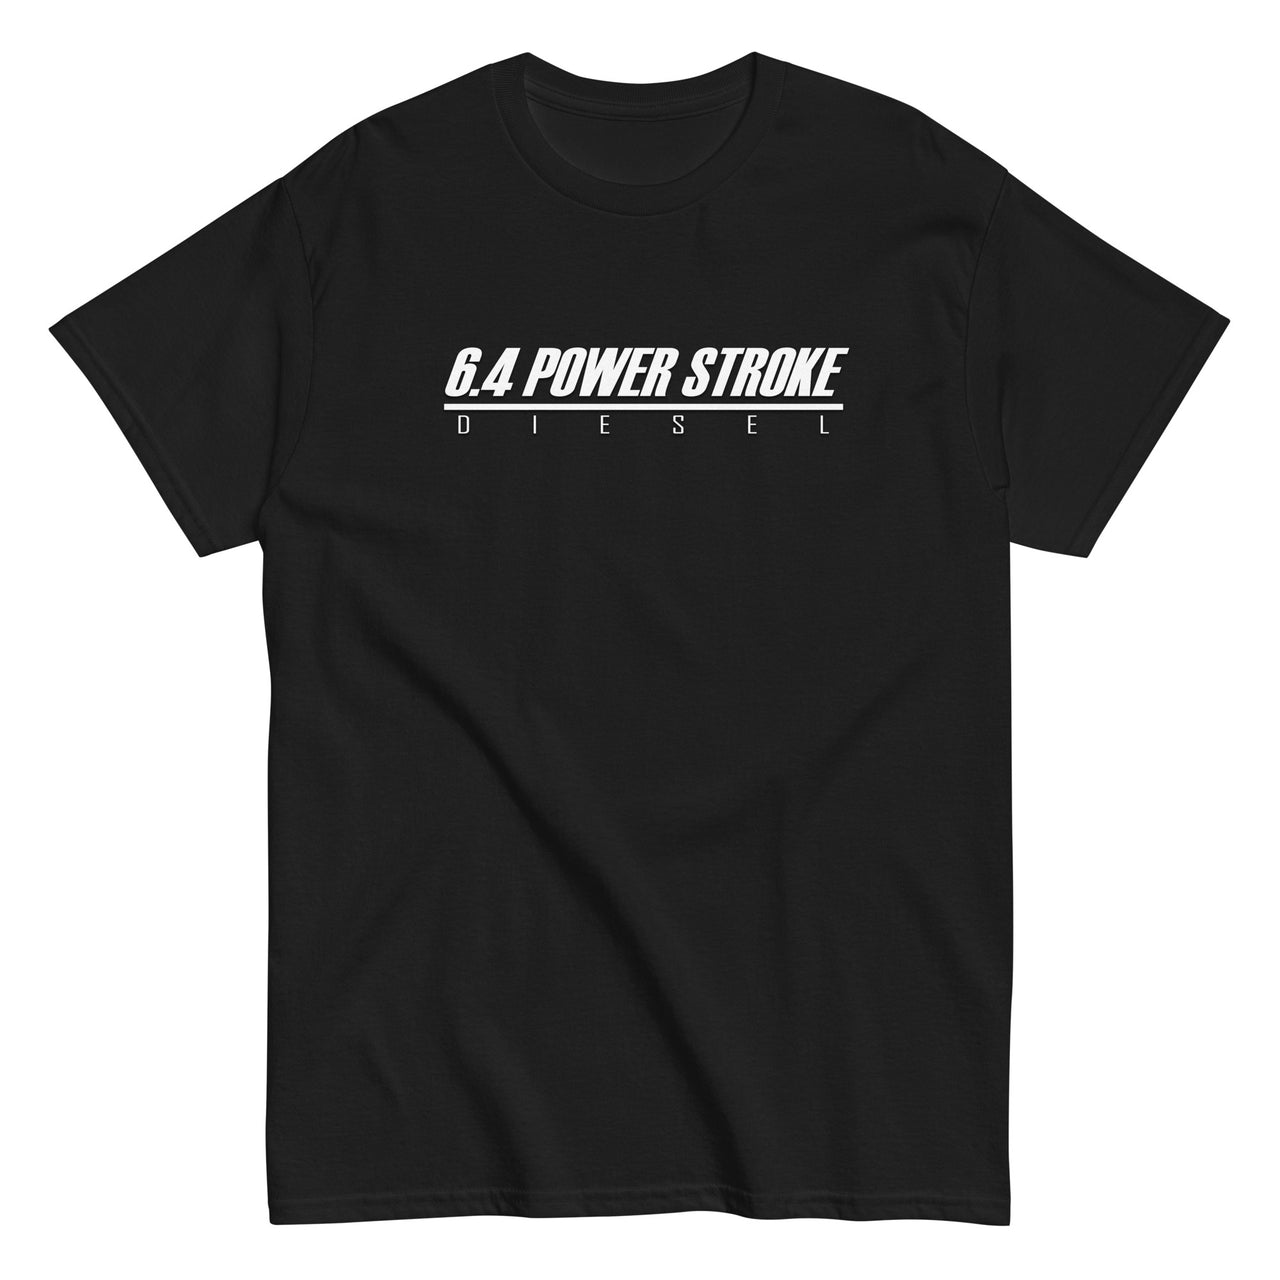 6.4 Power Stroke Trucks t-shirt in black